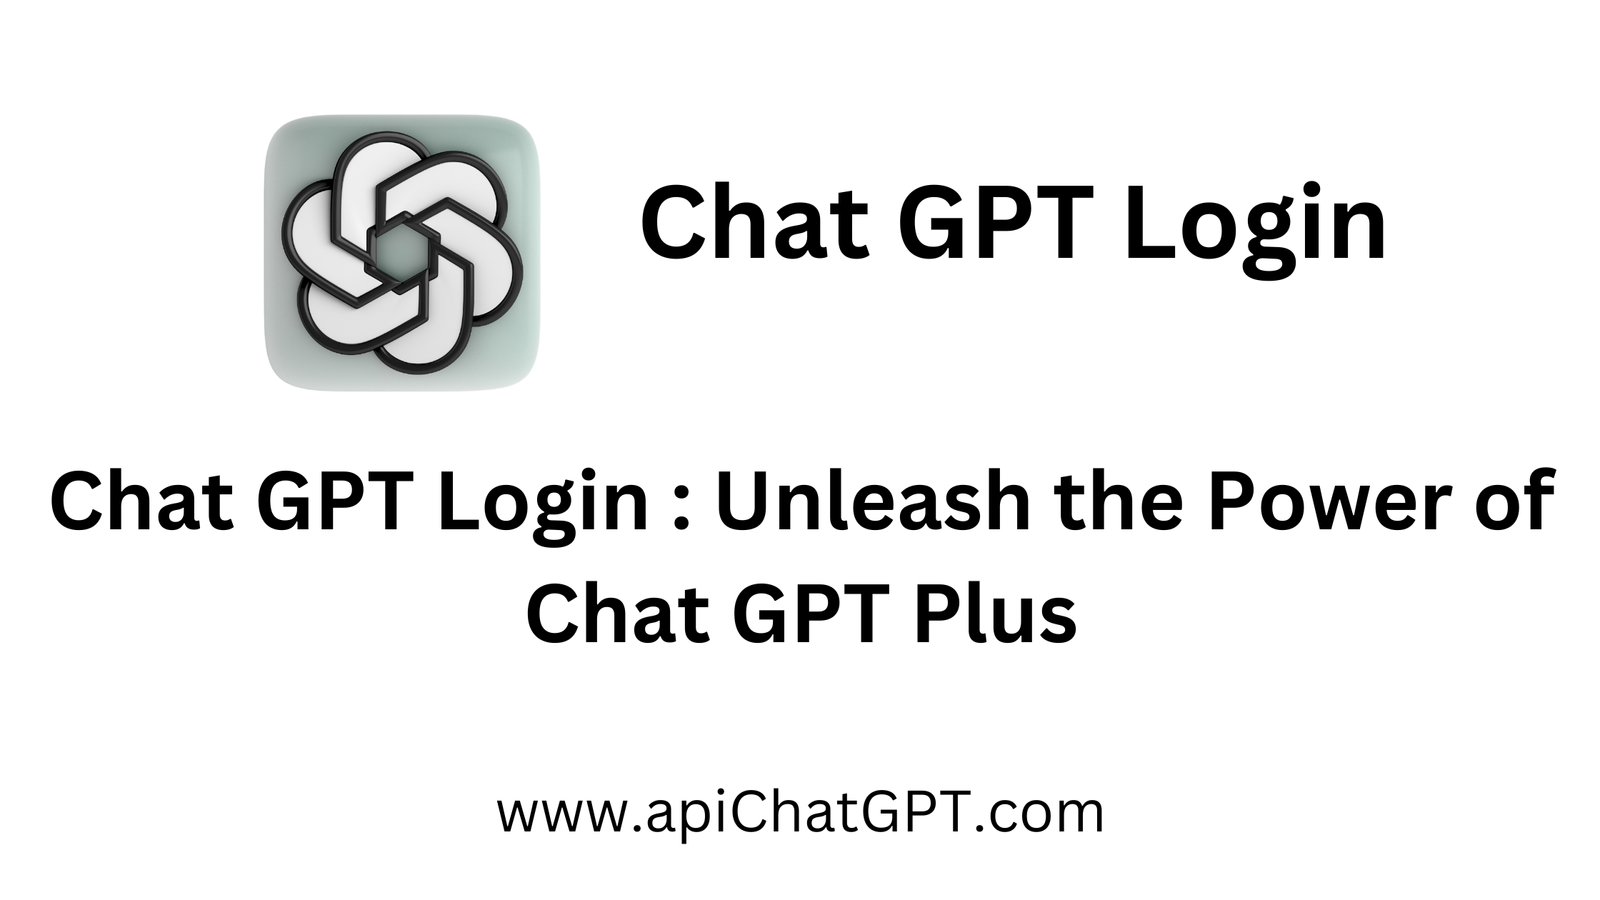 Chat GPT Login : Unleash the Power of Chat GPT Plus - Chat GPT Login